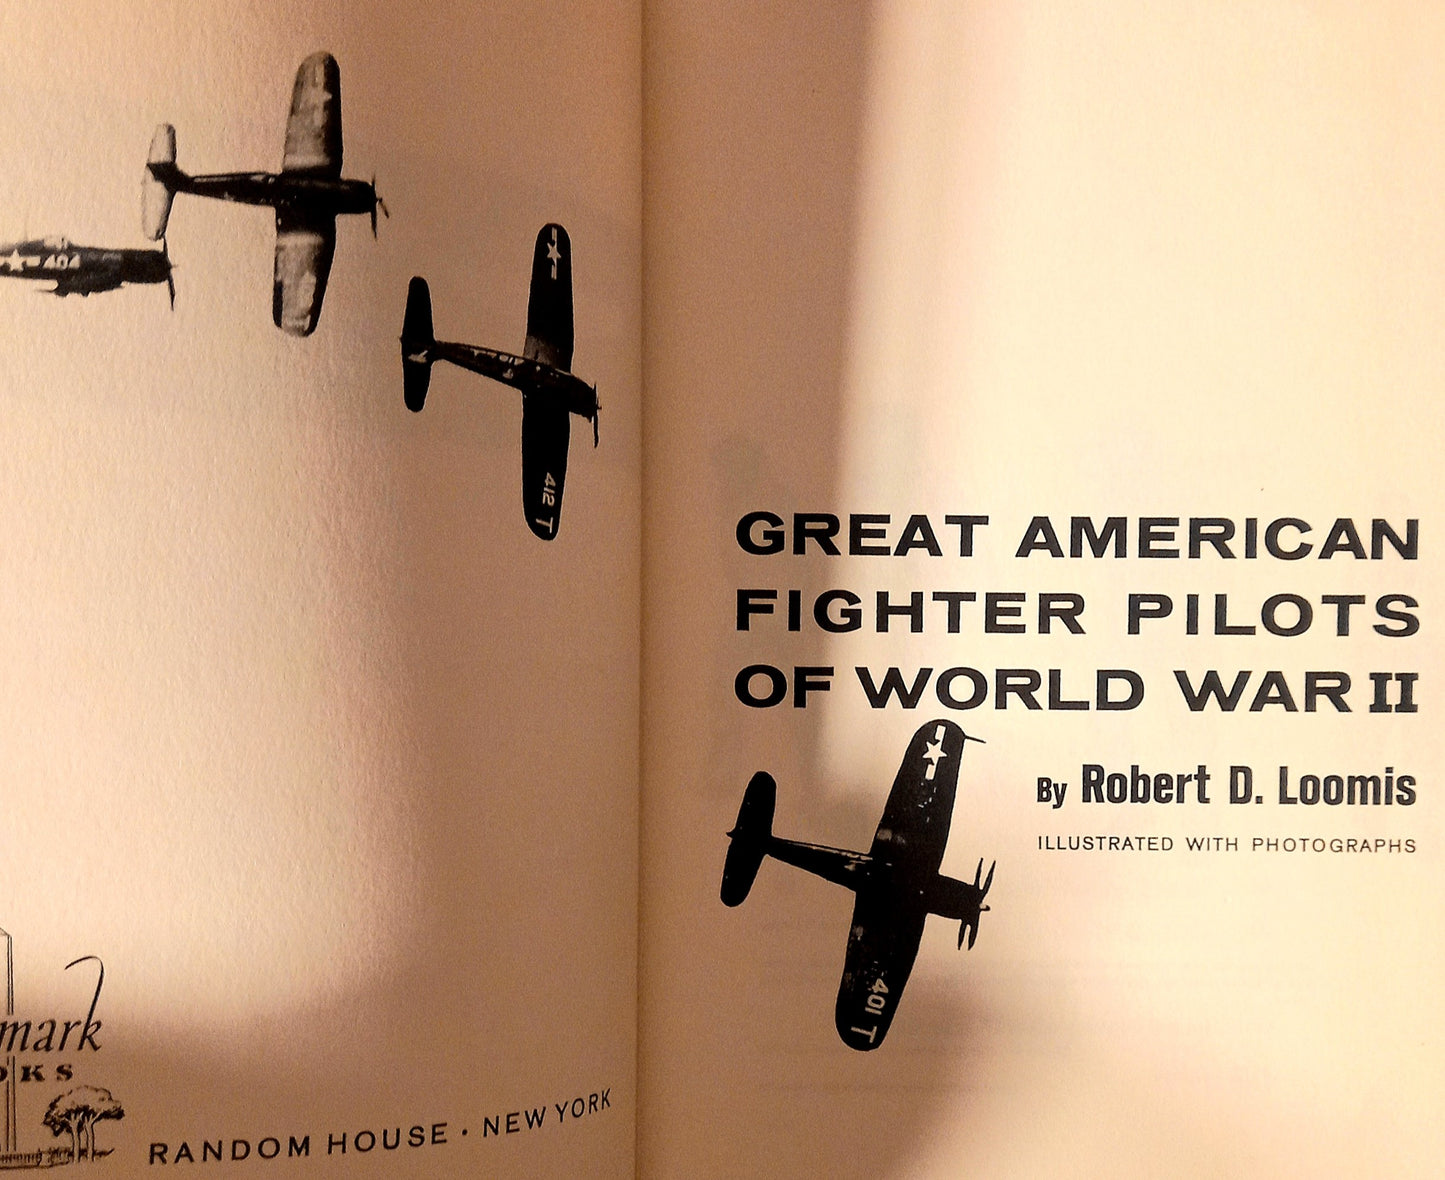 Great American Fighter Pilots of World War II